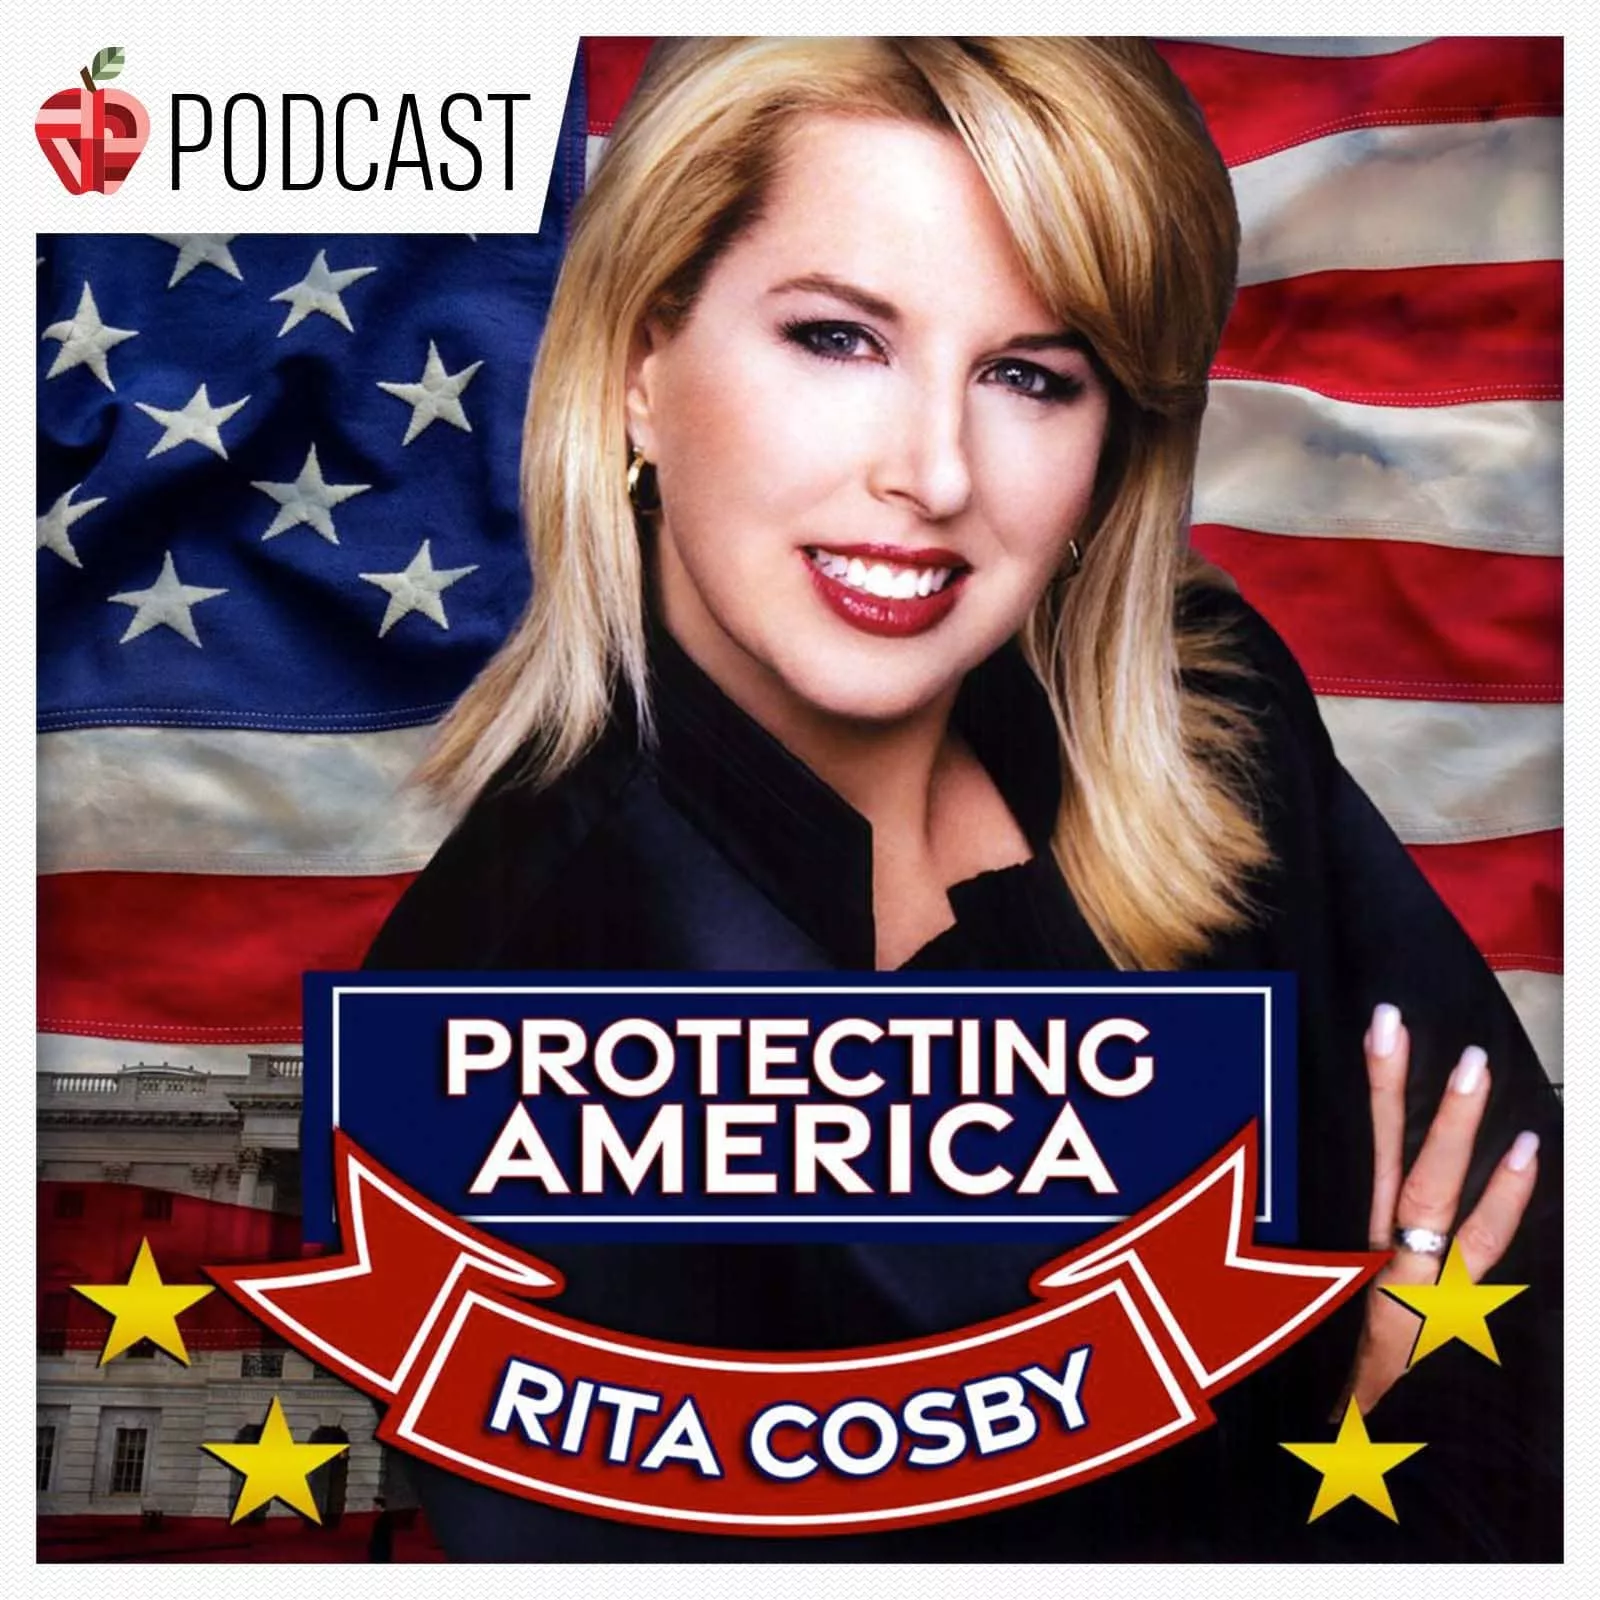 rita-cosby-protecting-america-correct-podcast-new-logo129813